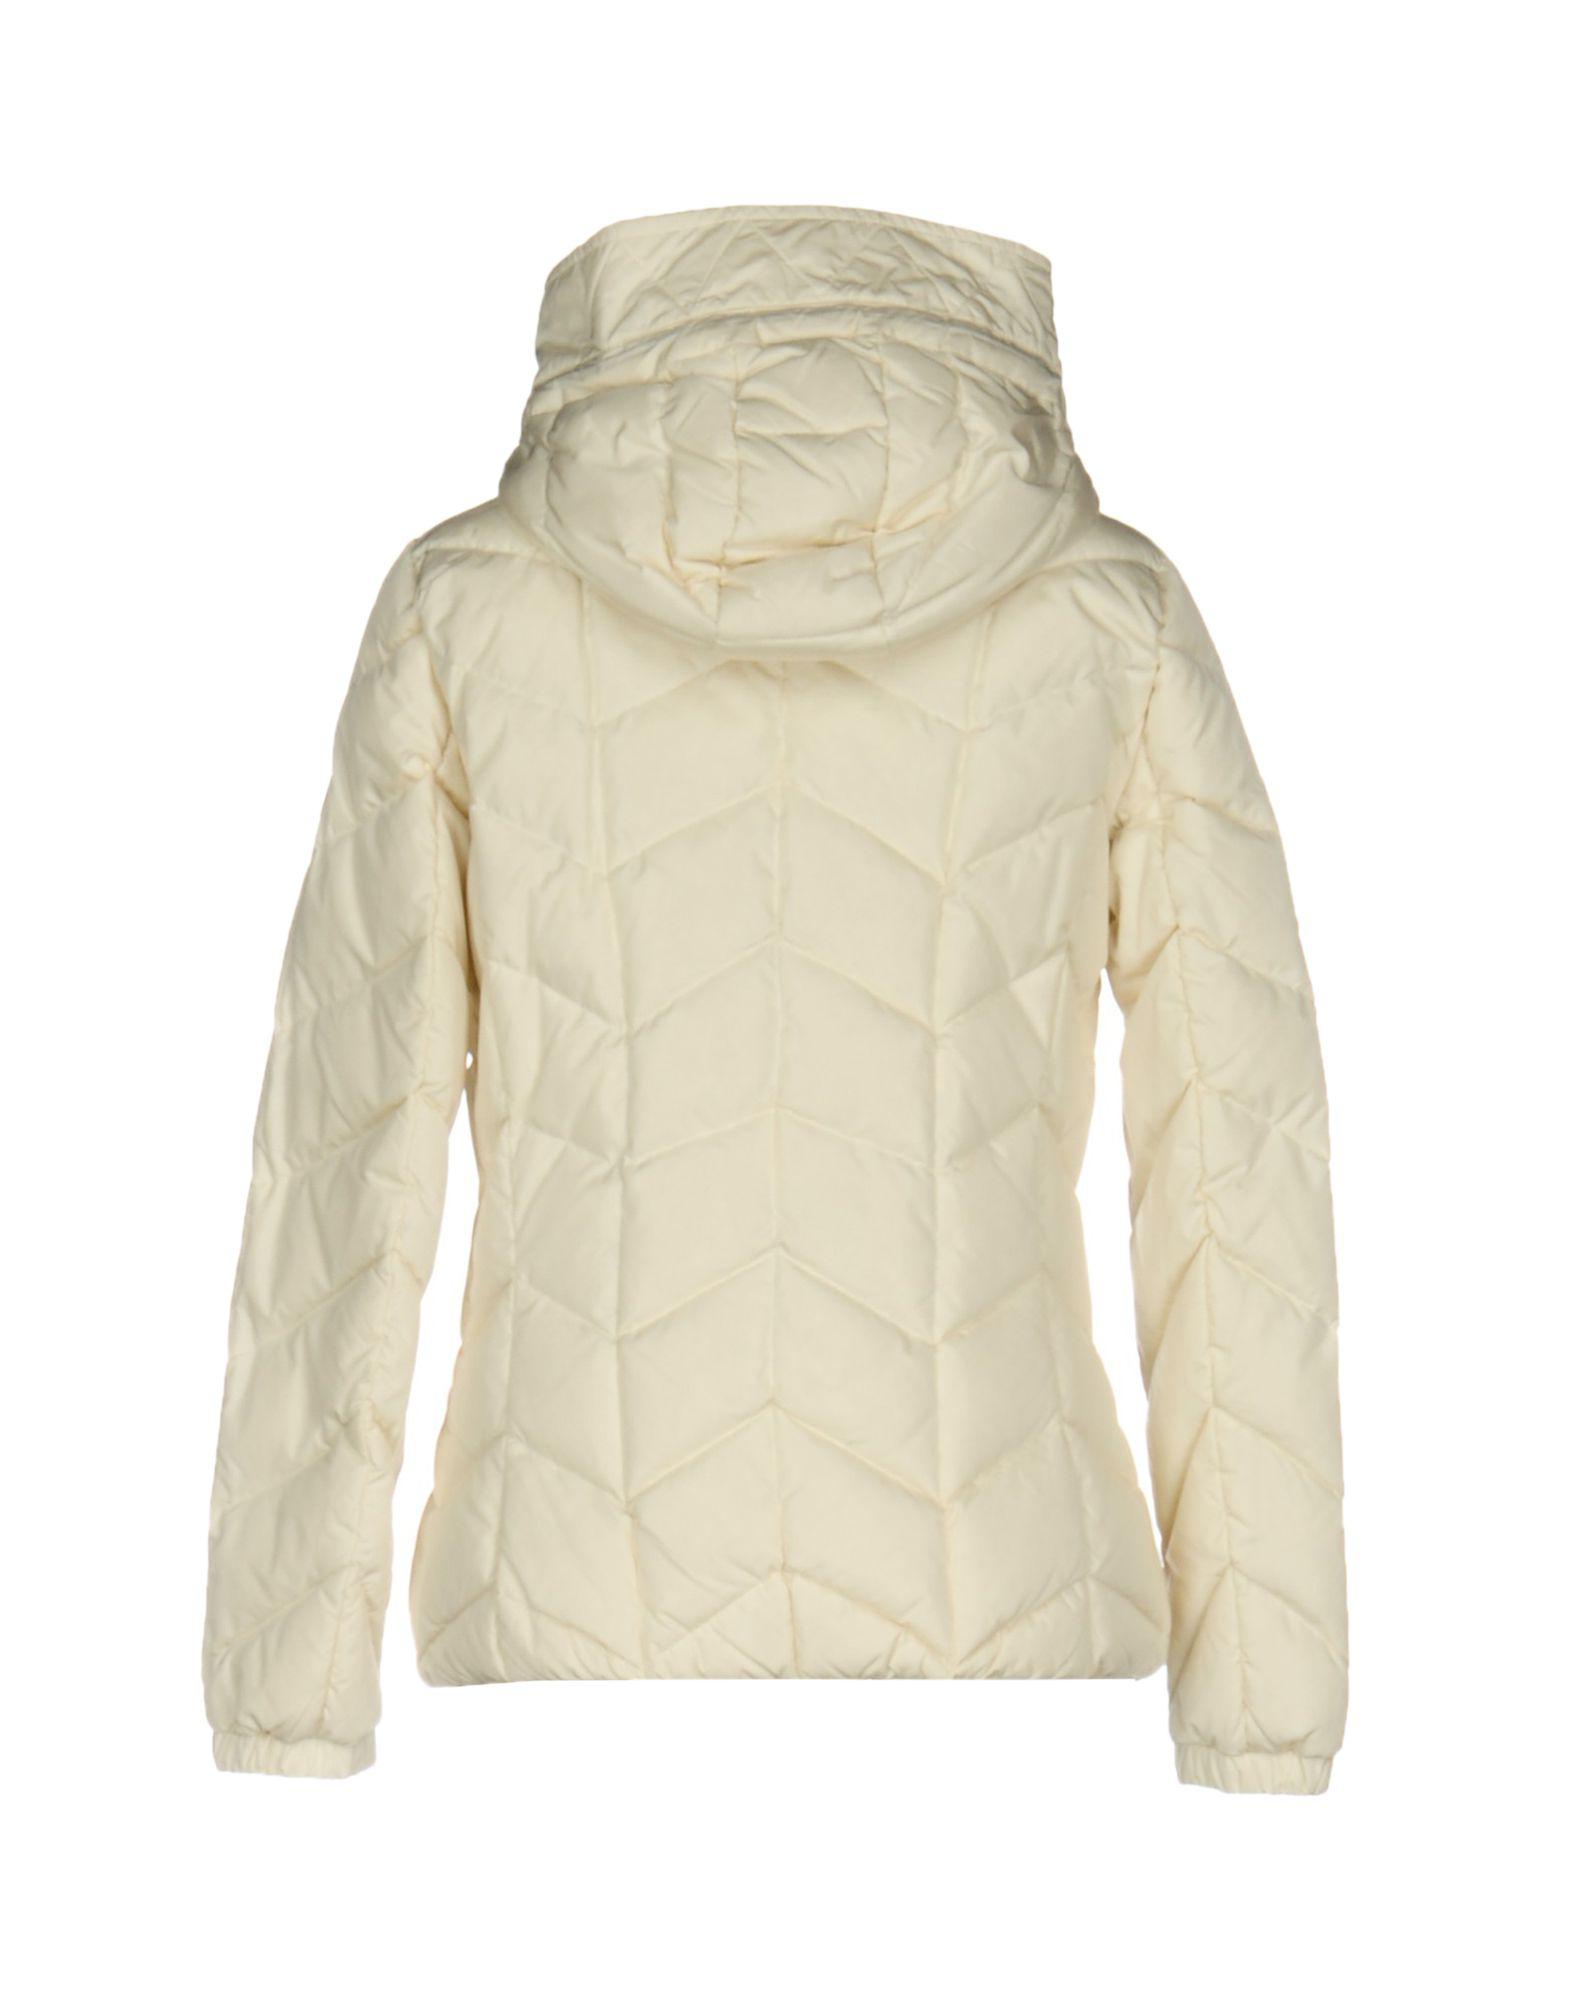 Jan Mayen Goose Down Jacket in White - Lyst